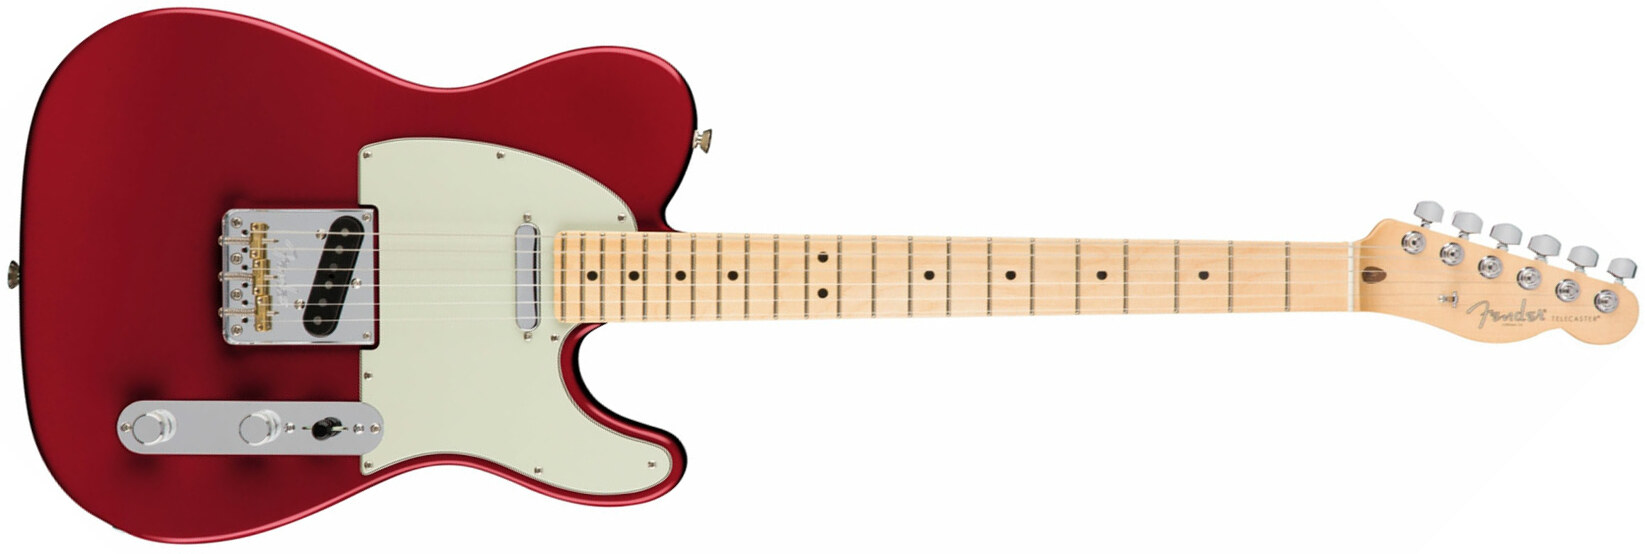 Fender Tele American Professional 2s Usa Mn - Candy Apple Red - Guitarra eléctrica con forma de tel - Main picture